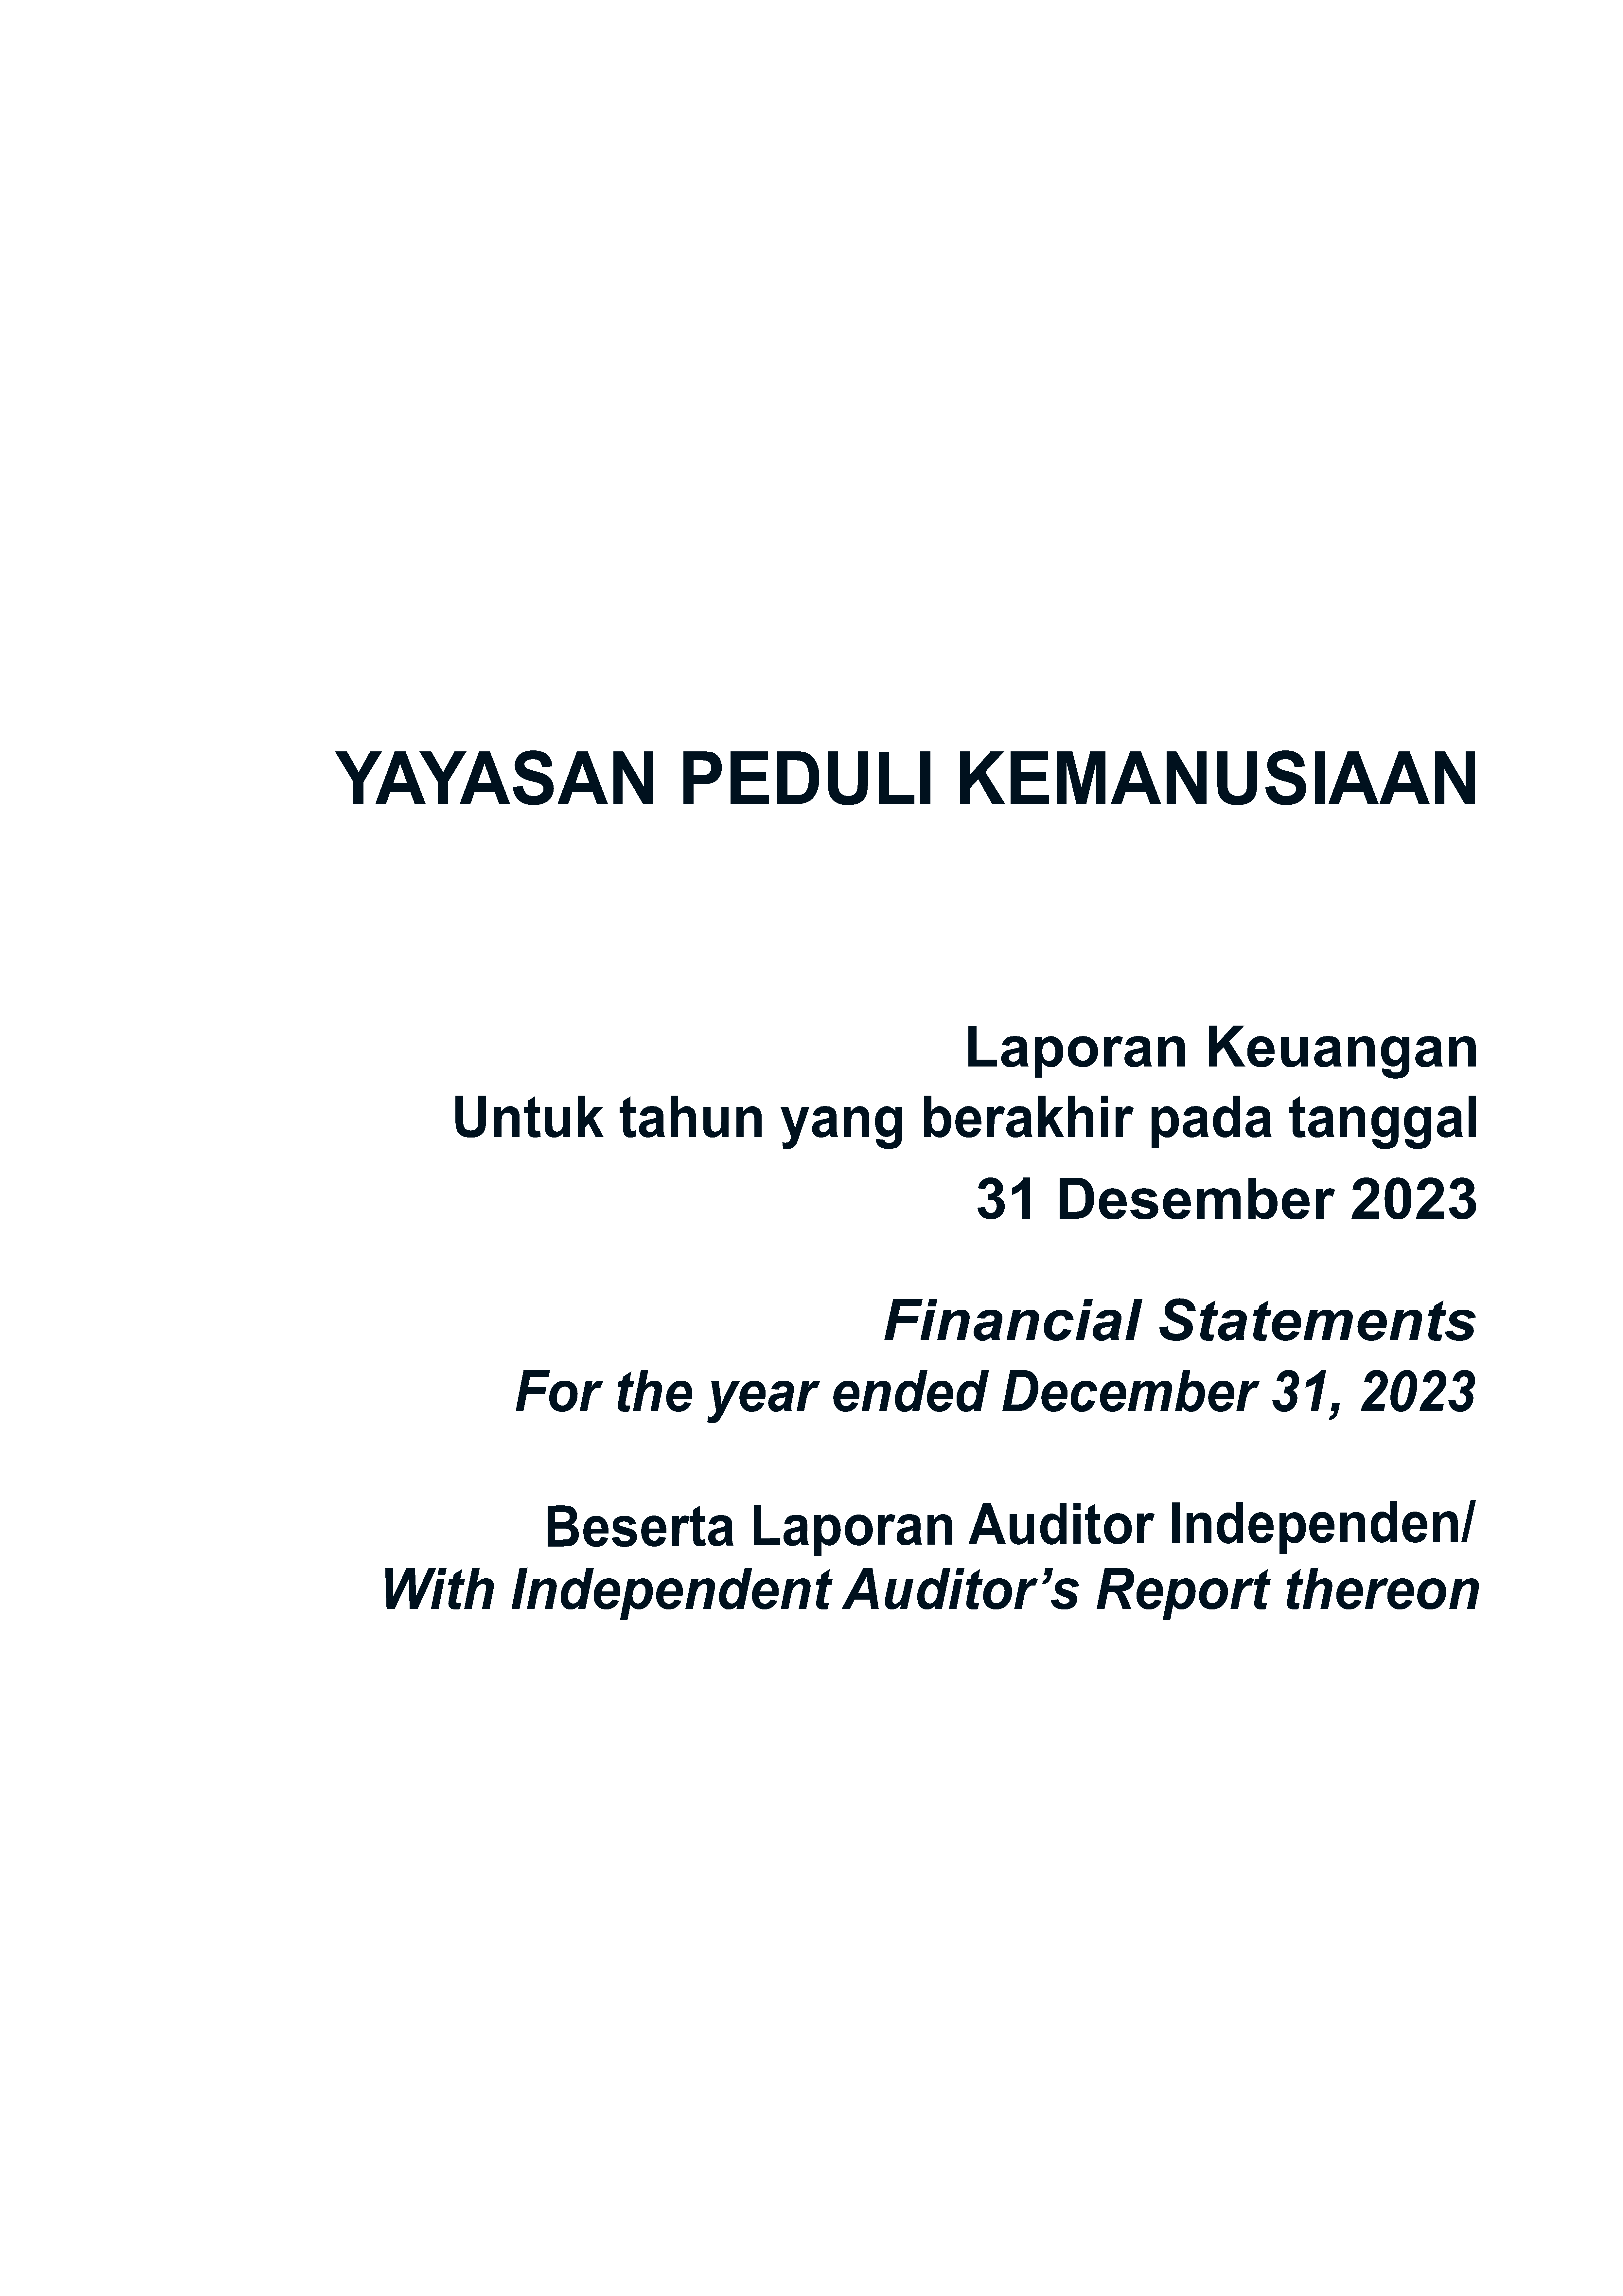 YPK Bali Auditor Report 2023